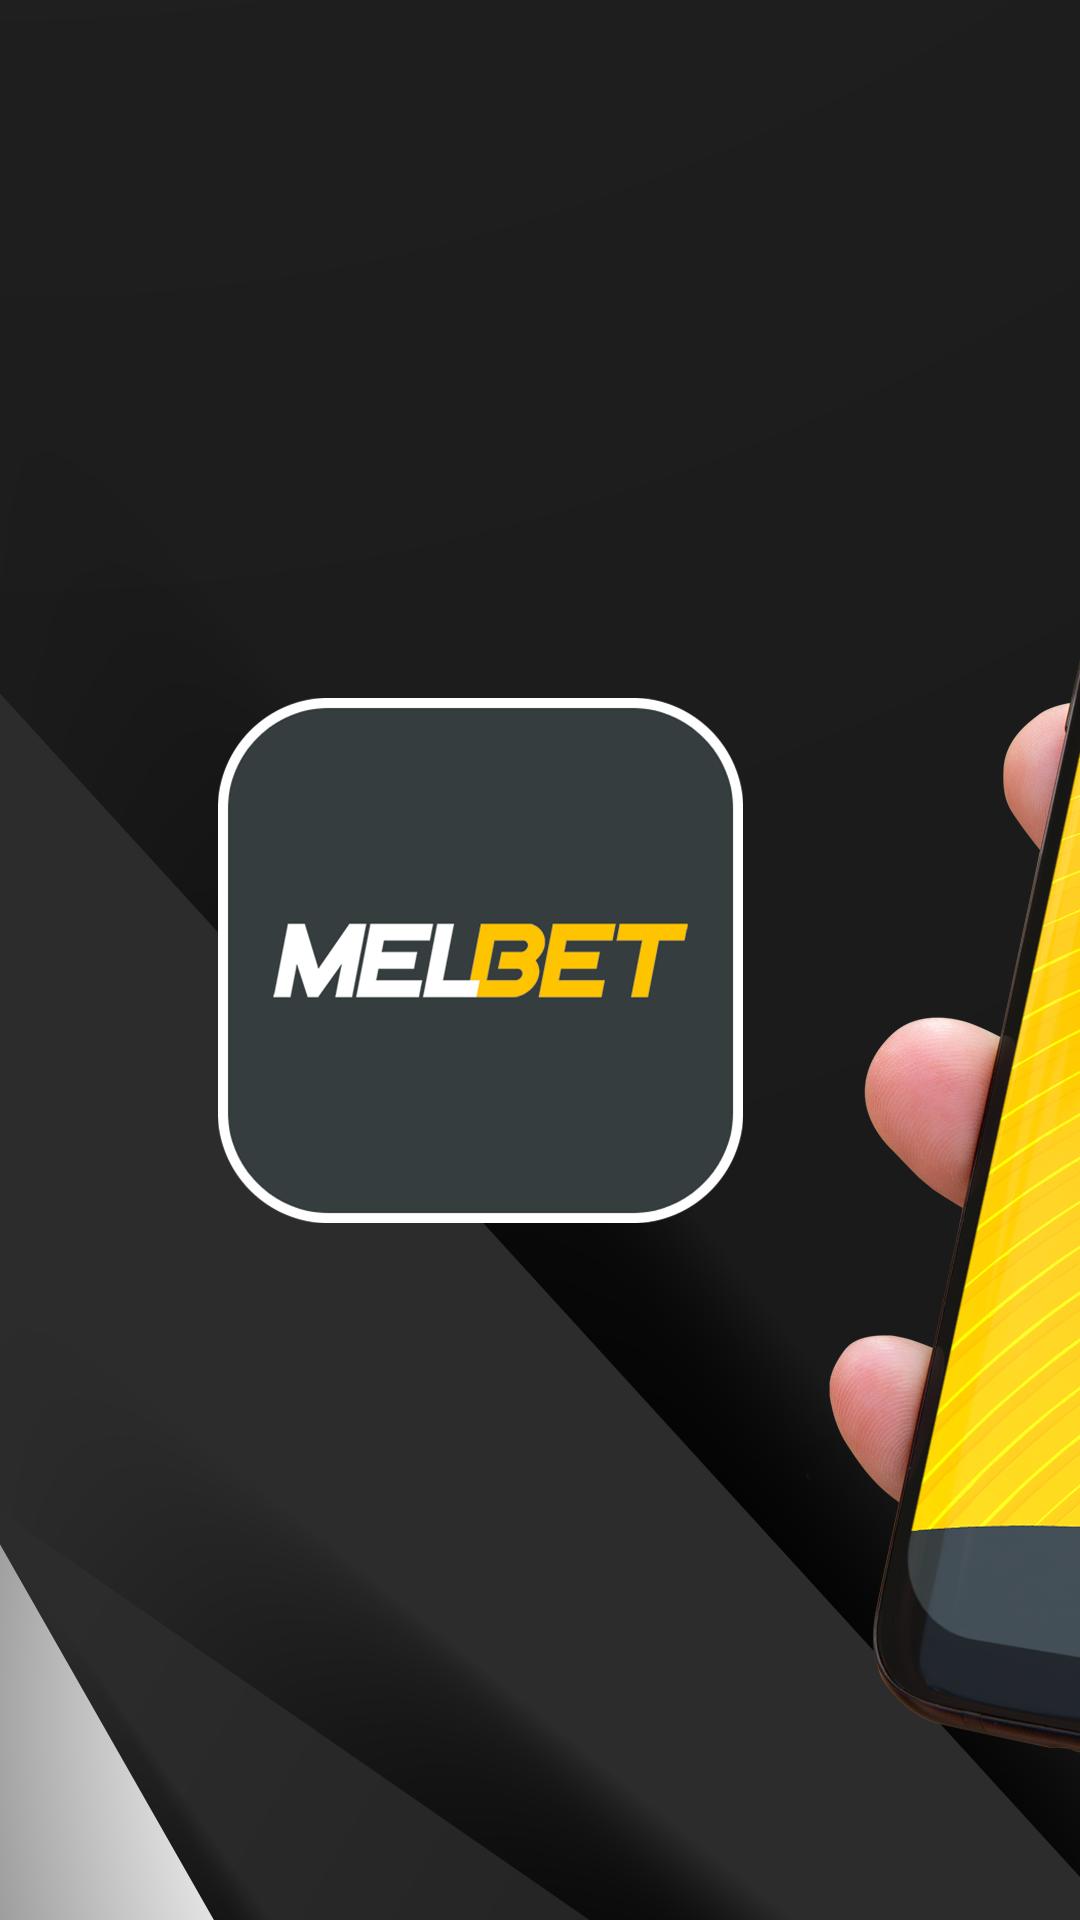 Melbet casino review - Sports India Show